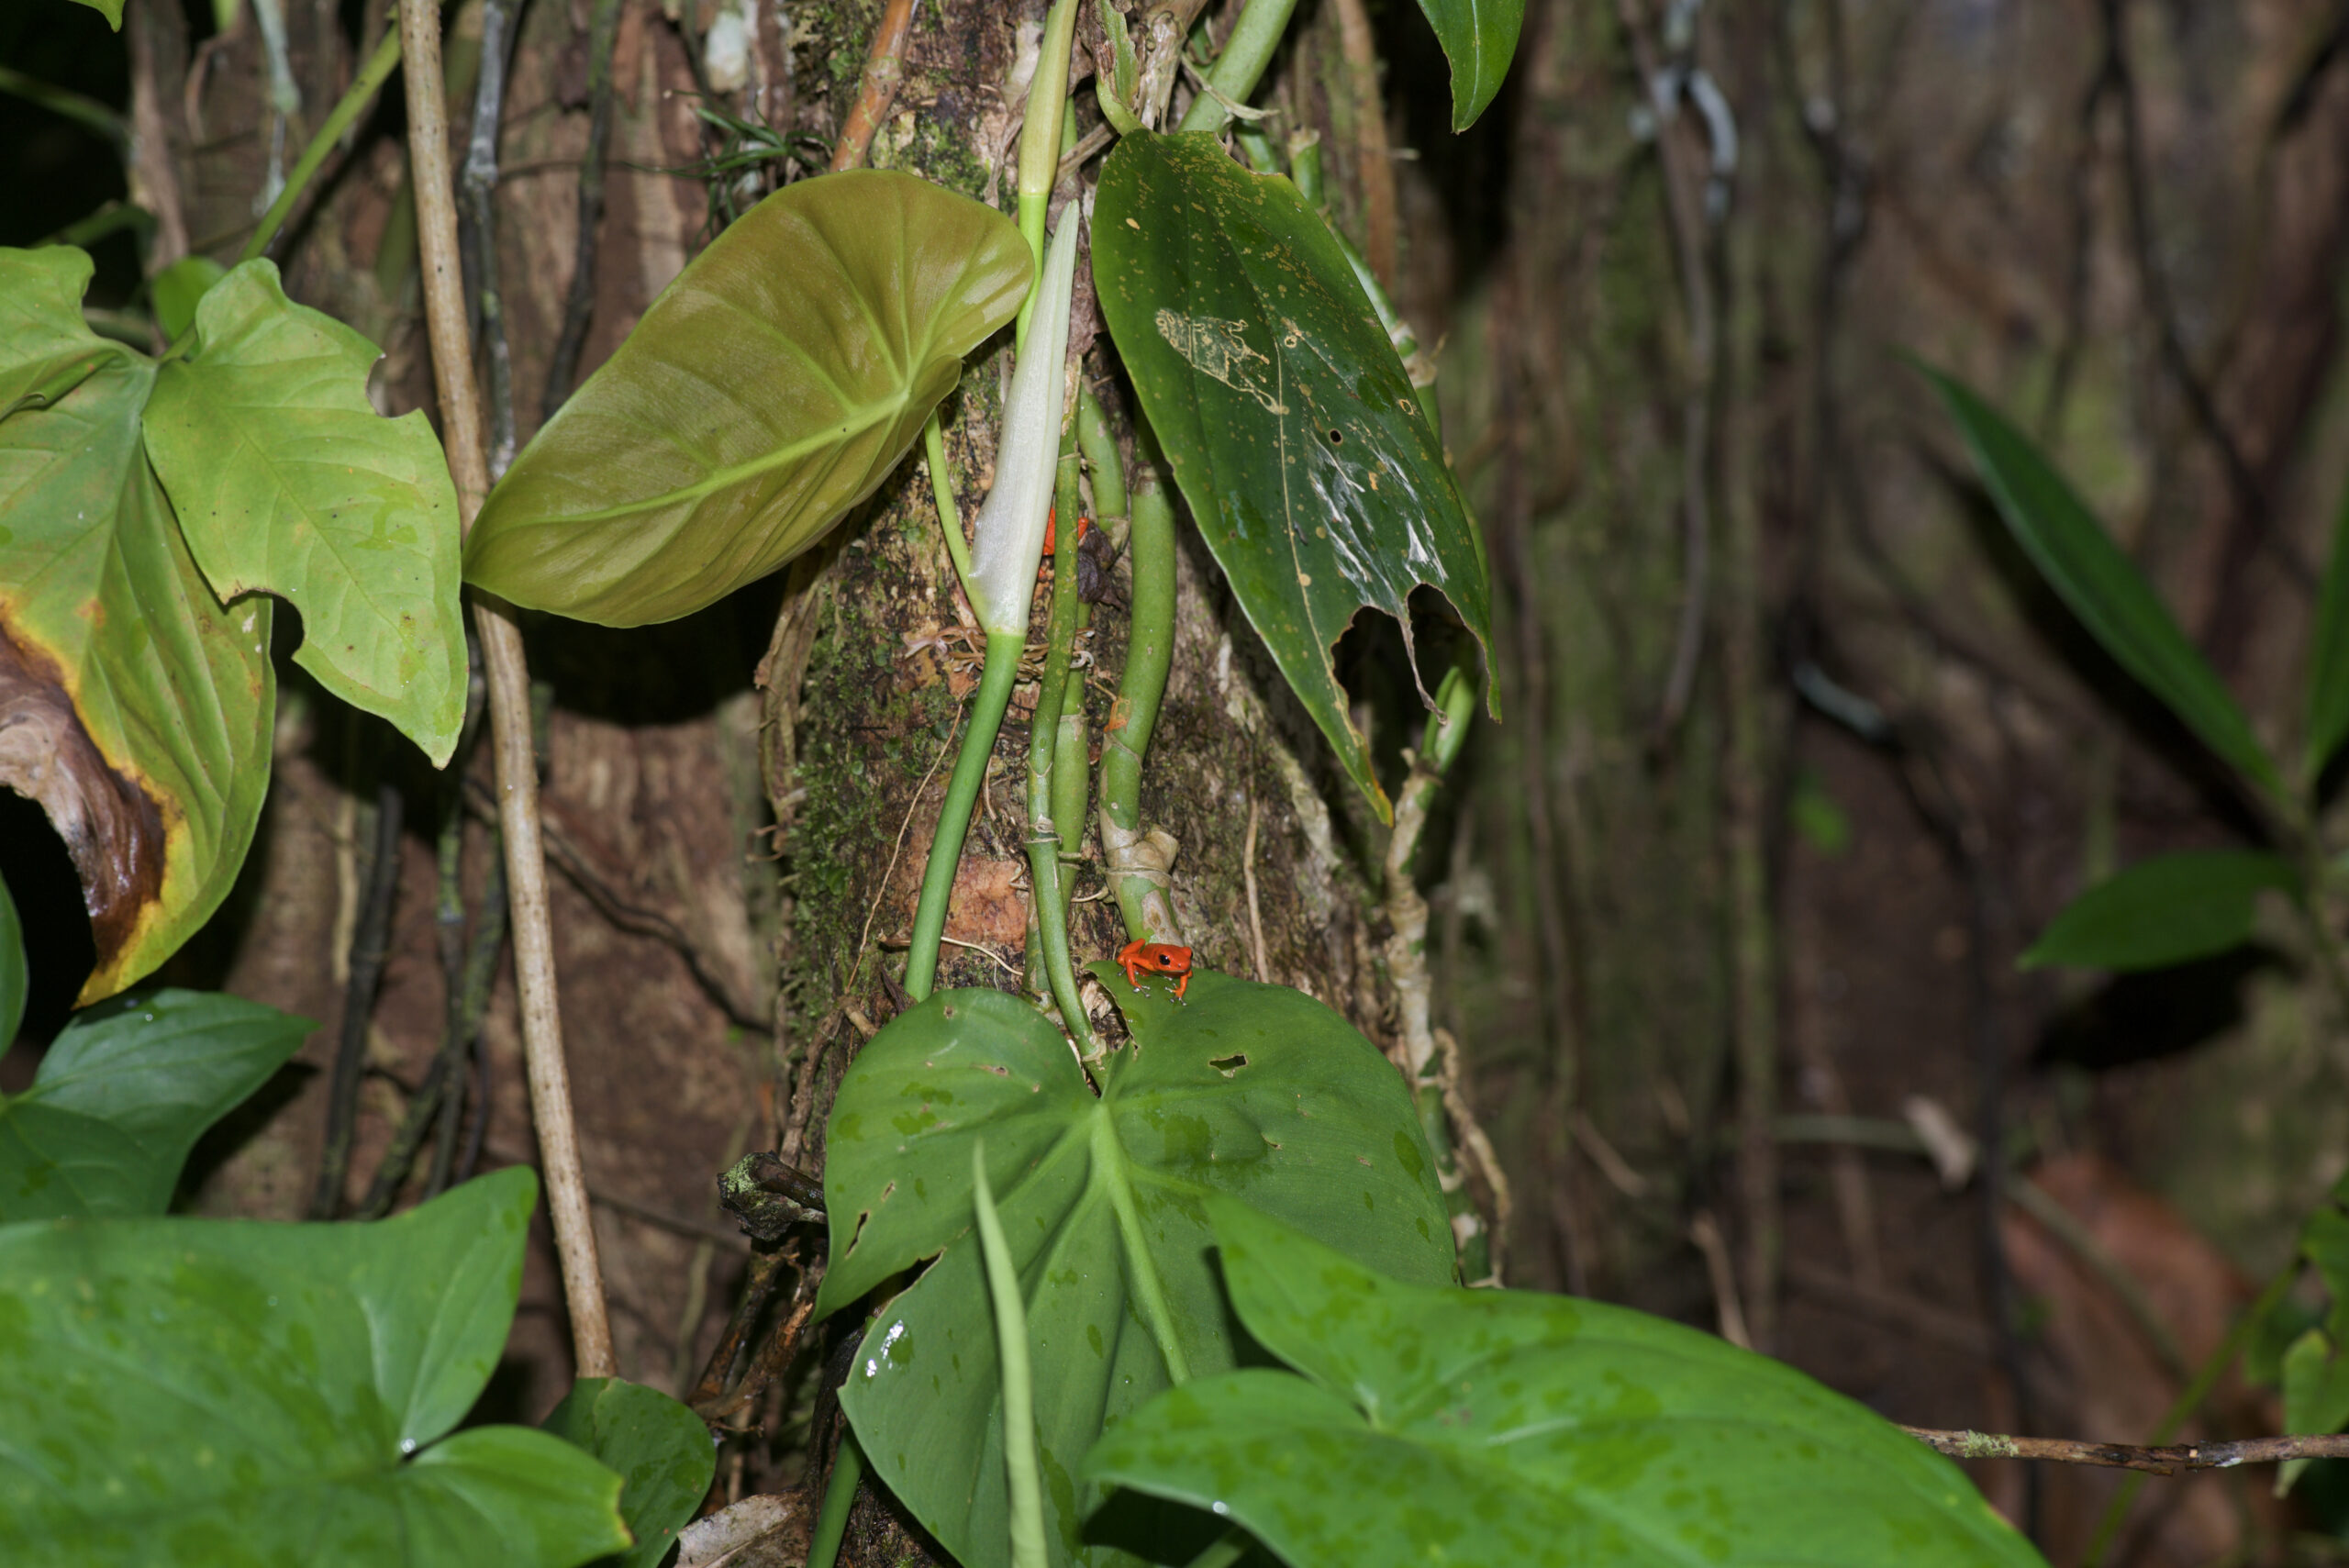 Oophaga pumilio from Isla Solarte, Bocas del Toro, Panama - by E. Van Heygen.